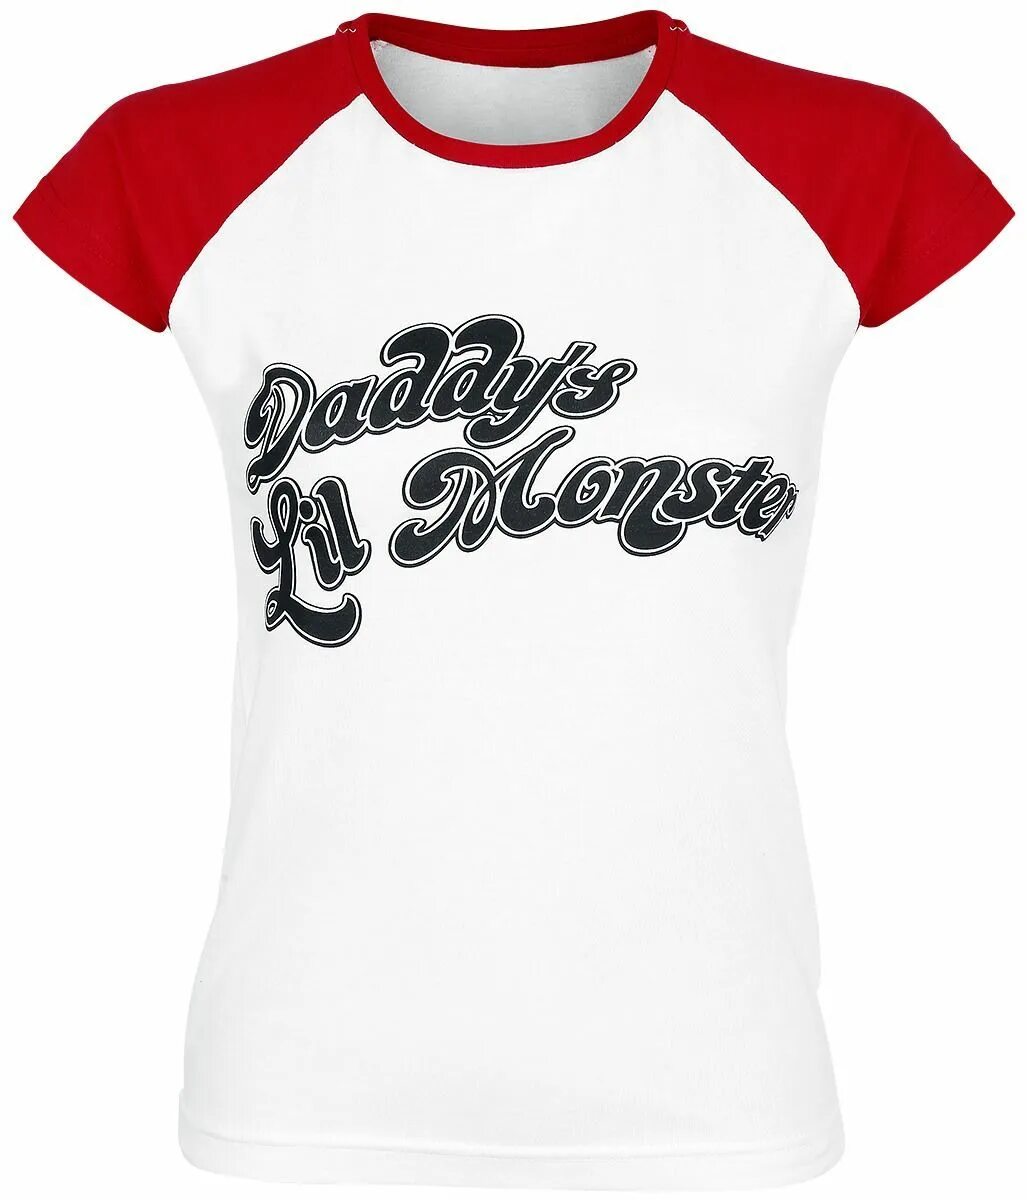 Daddy's lil. Футболка Харли Квинн Daddy Lil Monster. Daddy's Lil Monster майка. Харли Квинн Daddy's Lil Monster. Daddy's Lil Monster футболка.